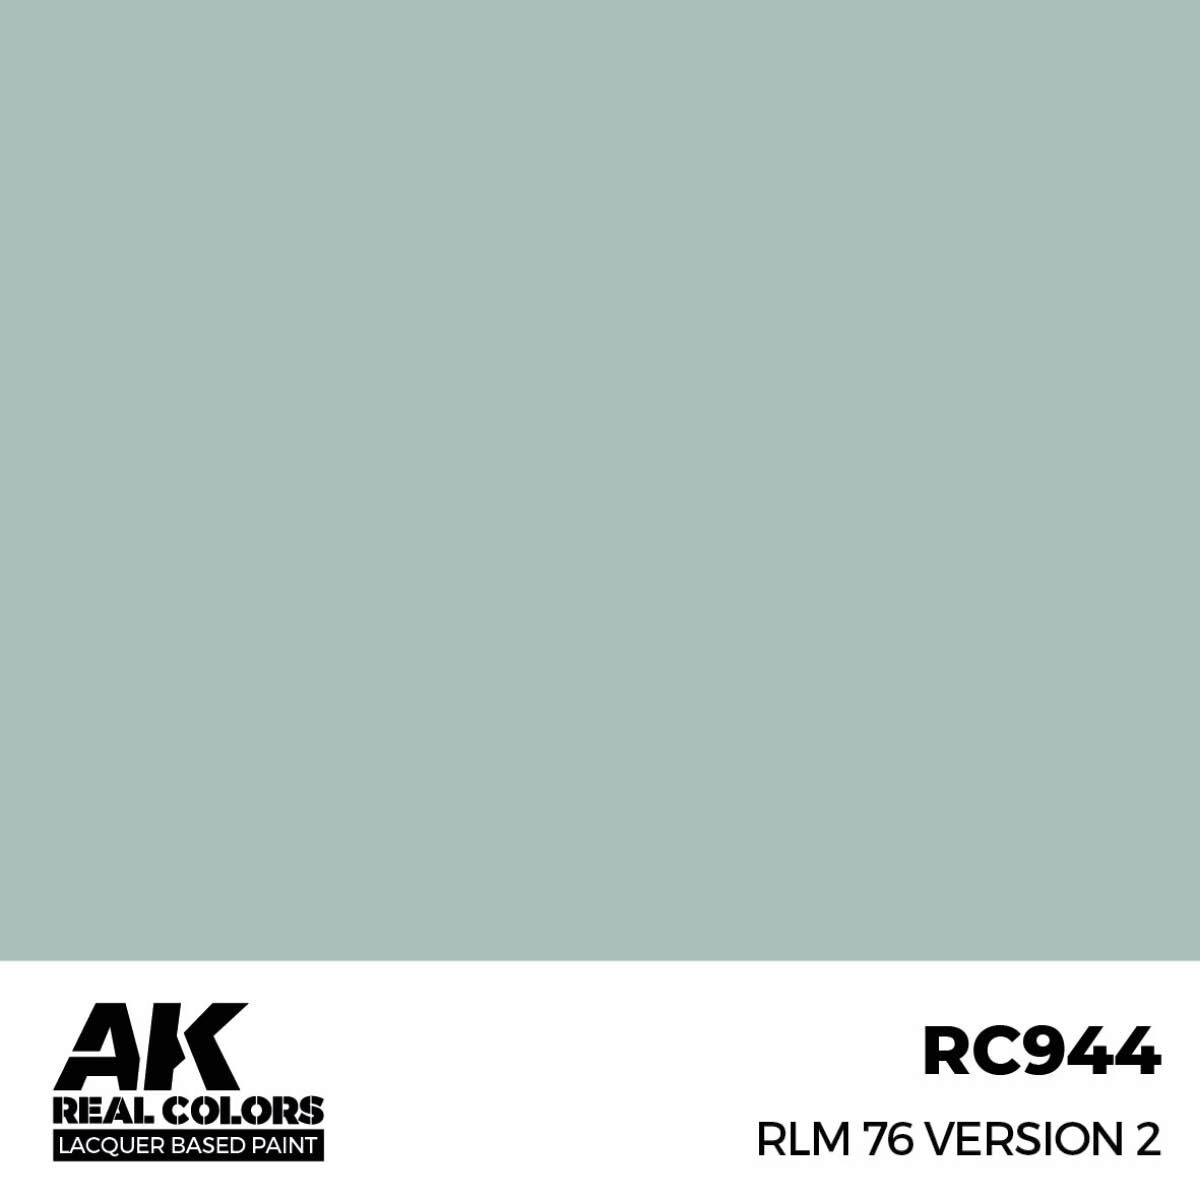 AK RC944 Real Colors RLM 76 Version 2 17 ml.